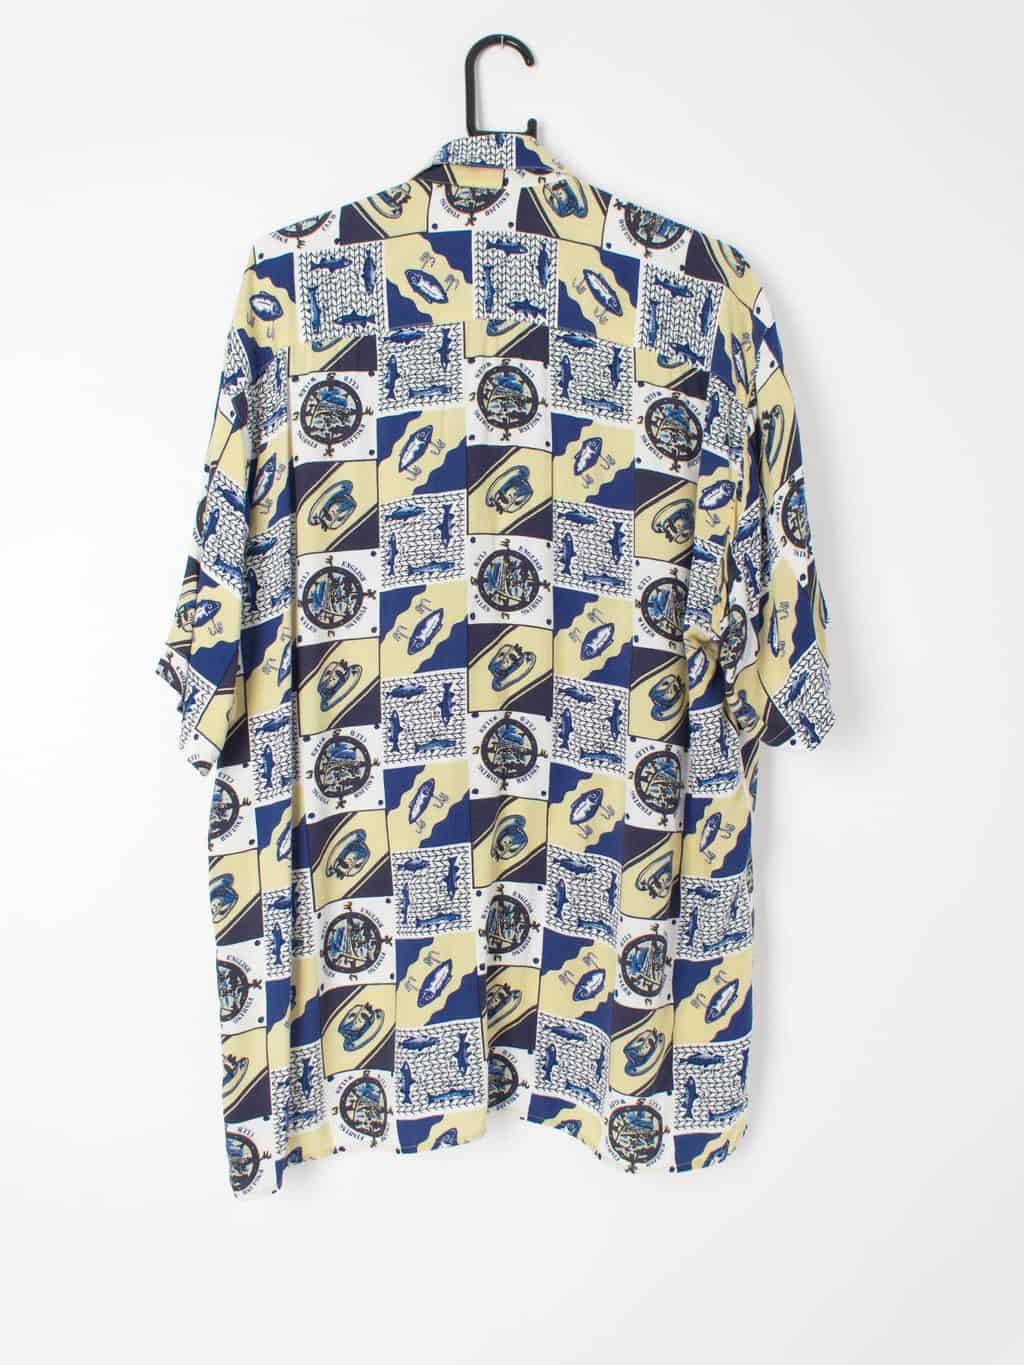 Vintage Mens Patterned Shirt Fishing Lure Tackle Hat Fish Motifs Blue Beige - Large